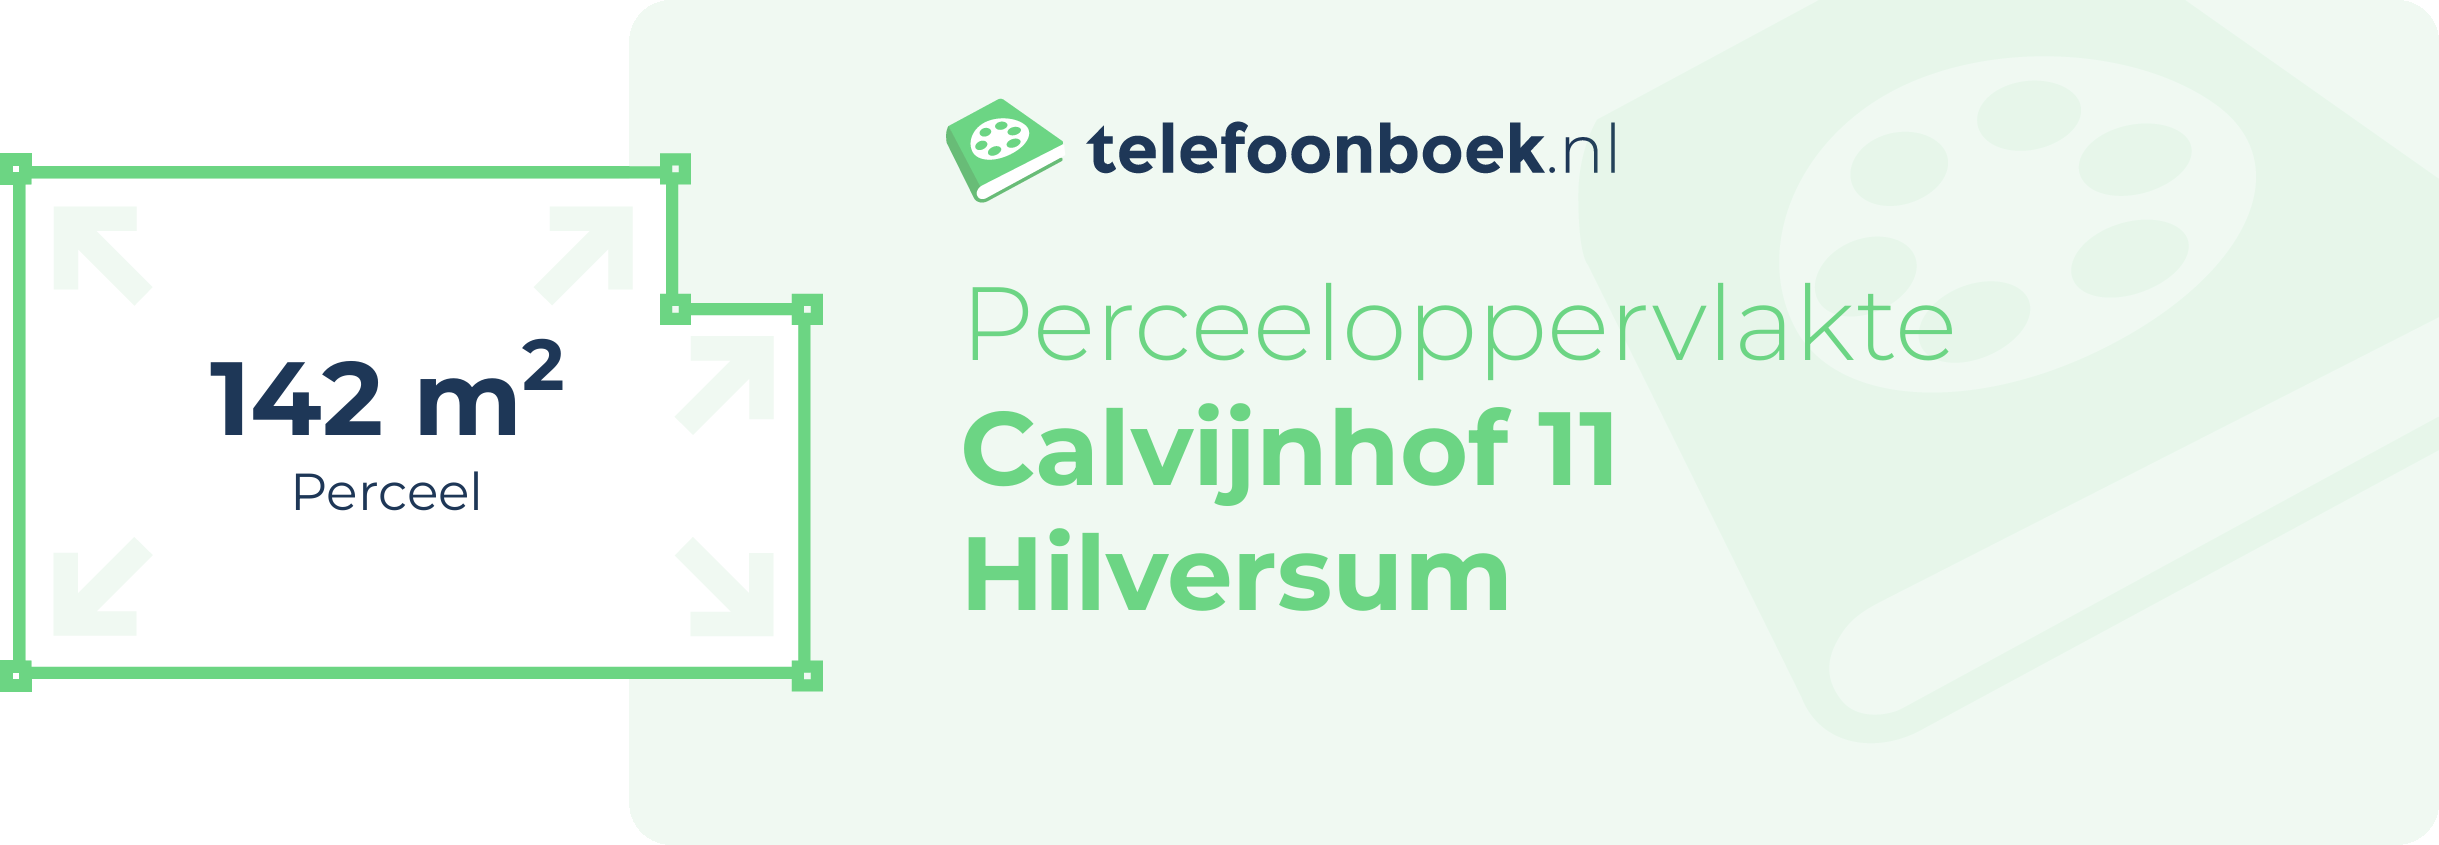 Perceeloppervlakte Calvijnhof 11 Hilversum